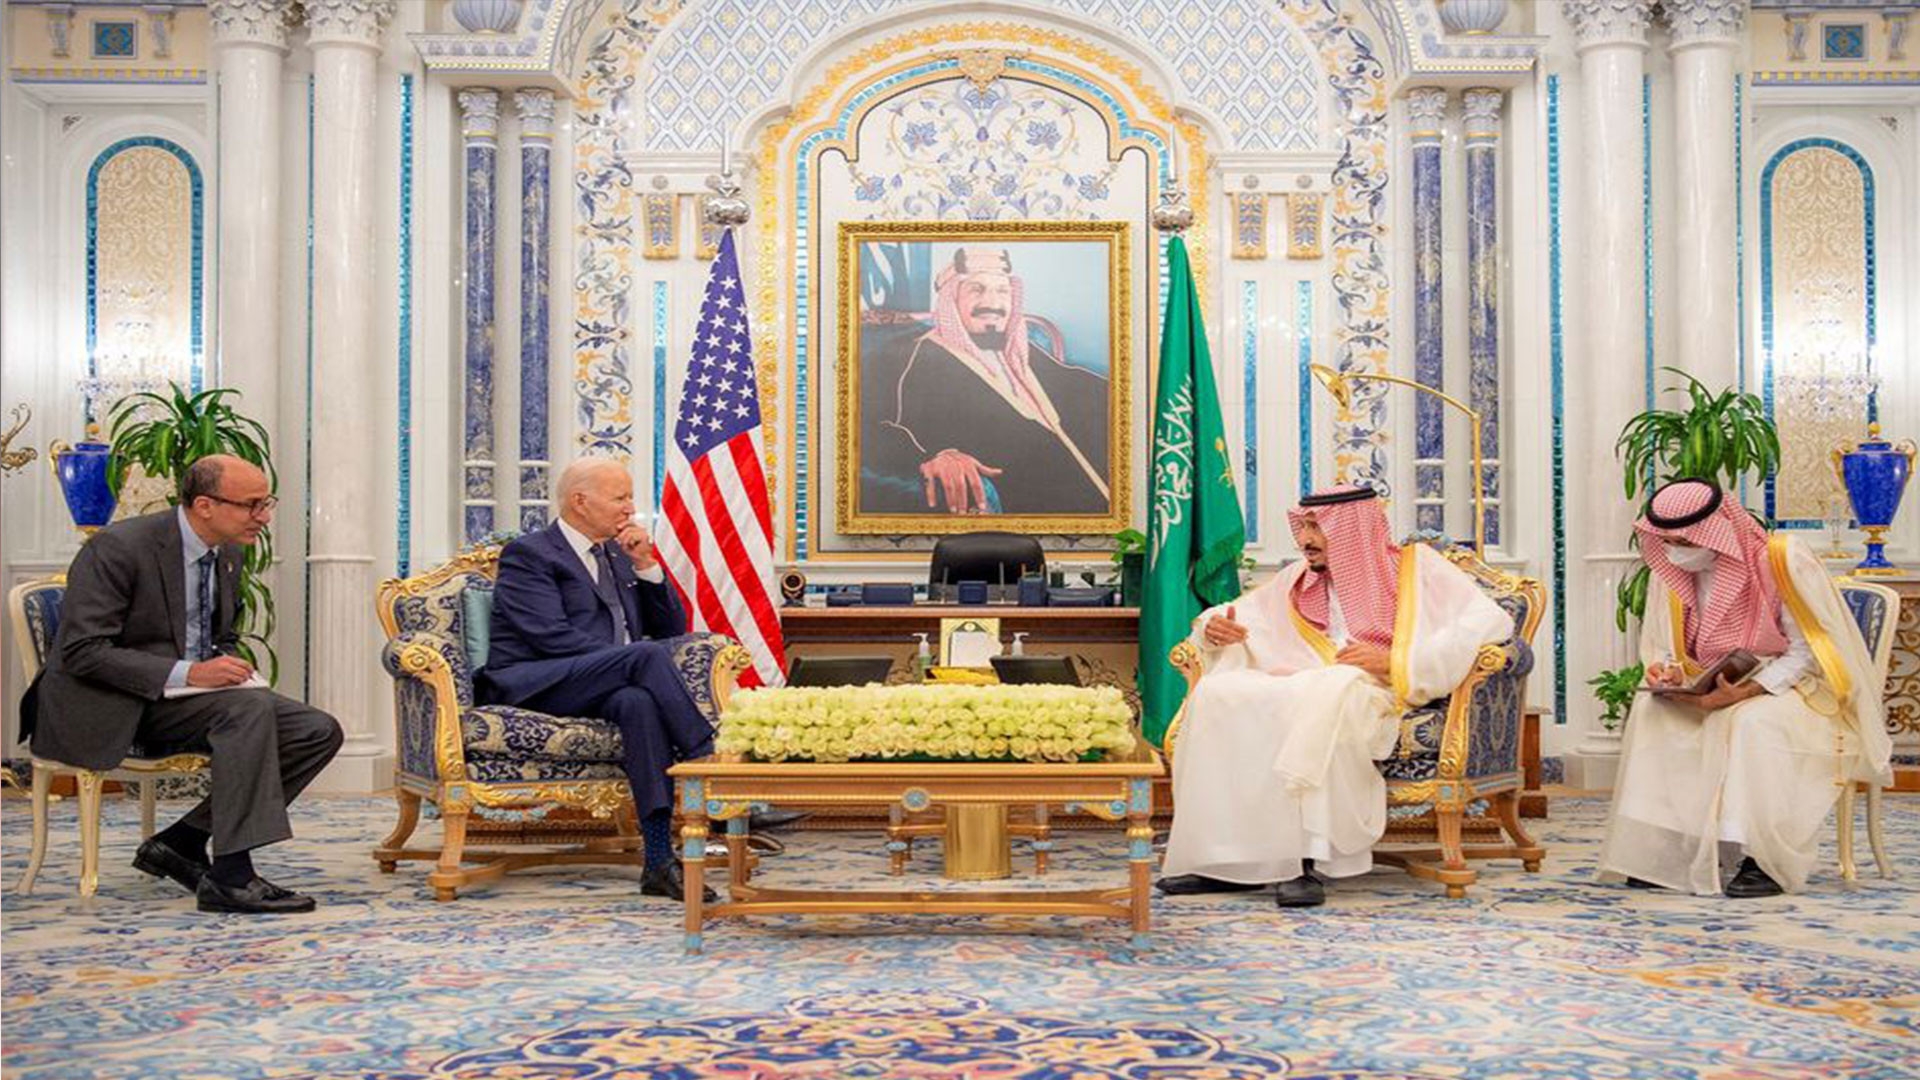  Saudi King Salman bin Abdulaziz receives U.S. President Joe Biden at Al Salman Palace upon his arrival in Jeddah, Saudi Arabia, July 15, 2022. Bandar Algaloud/Courtesy of Saudi Royal Court/Handout via REUTERS